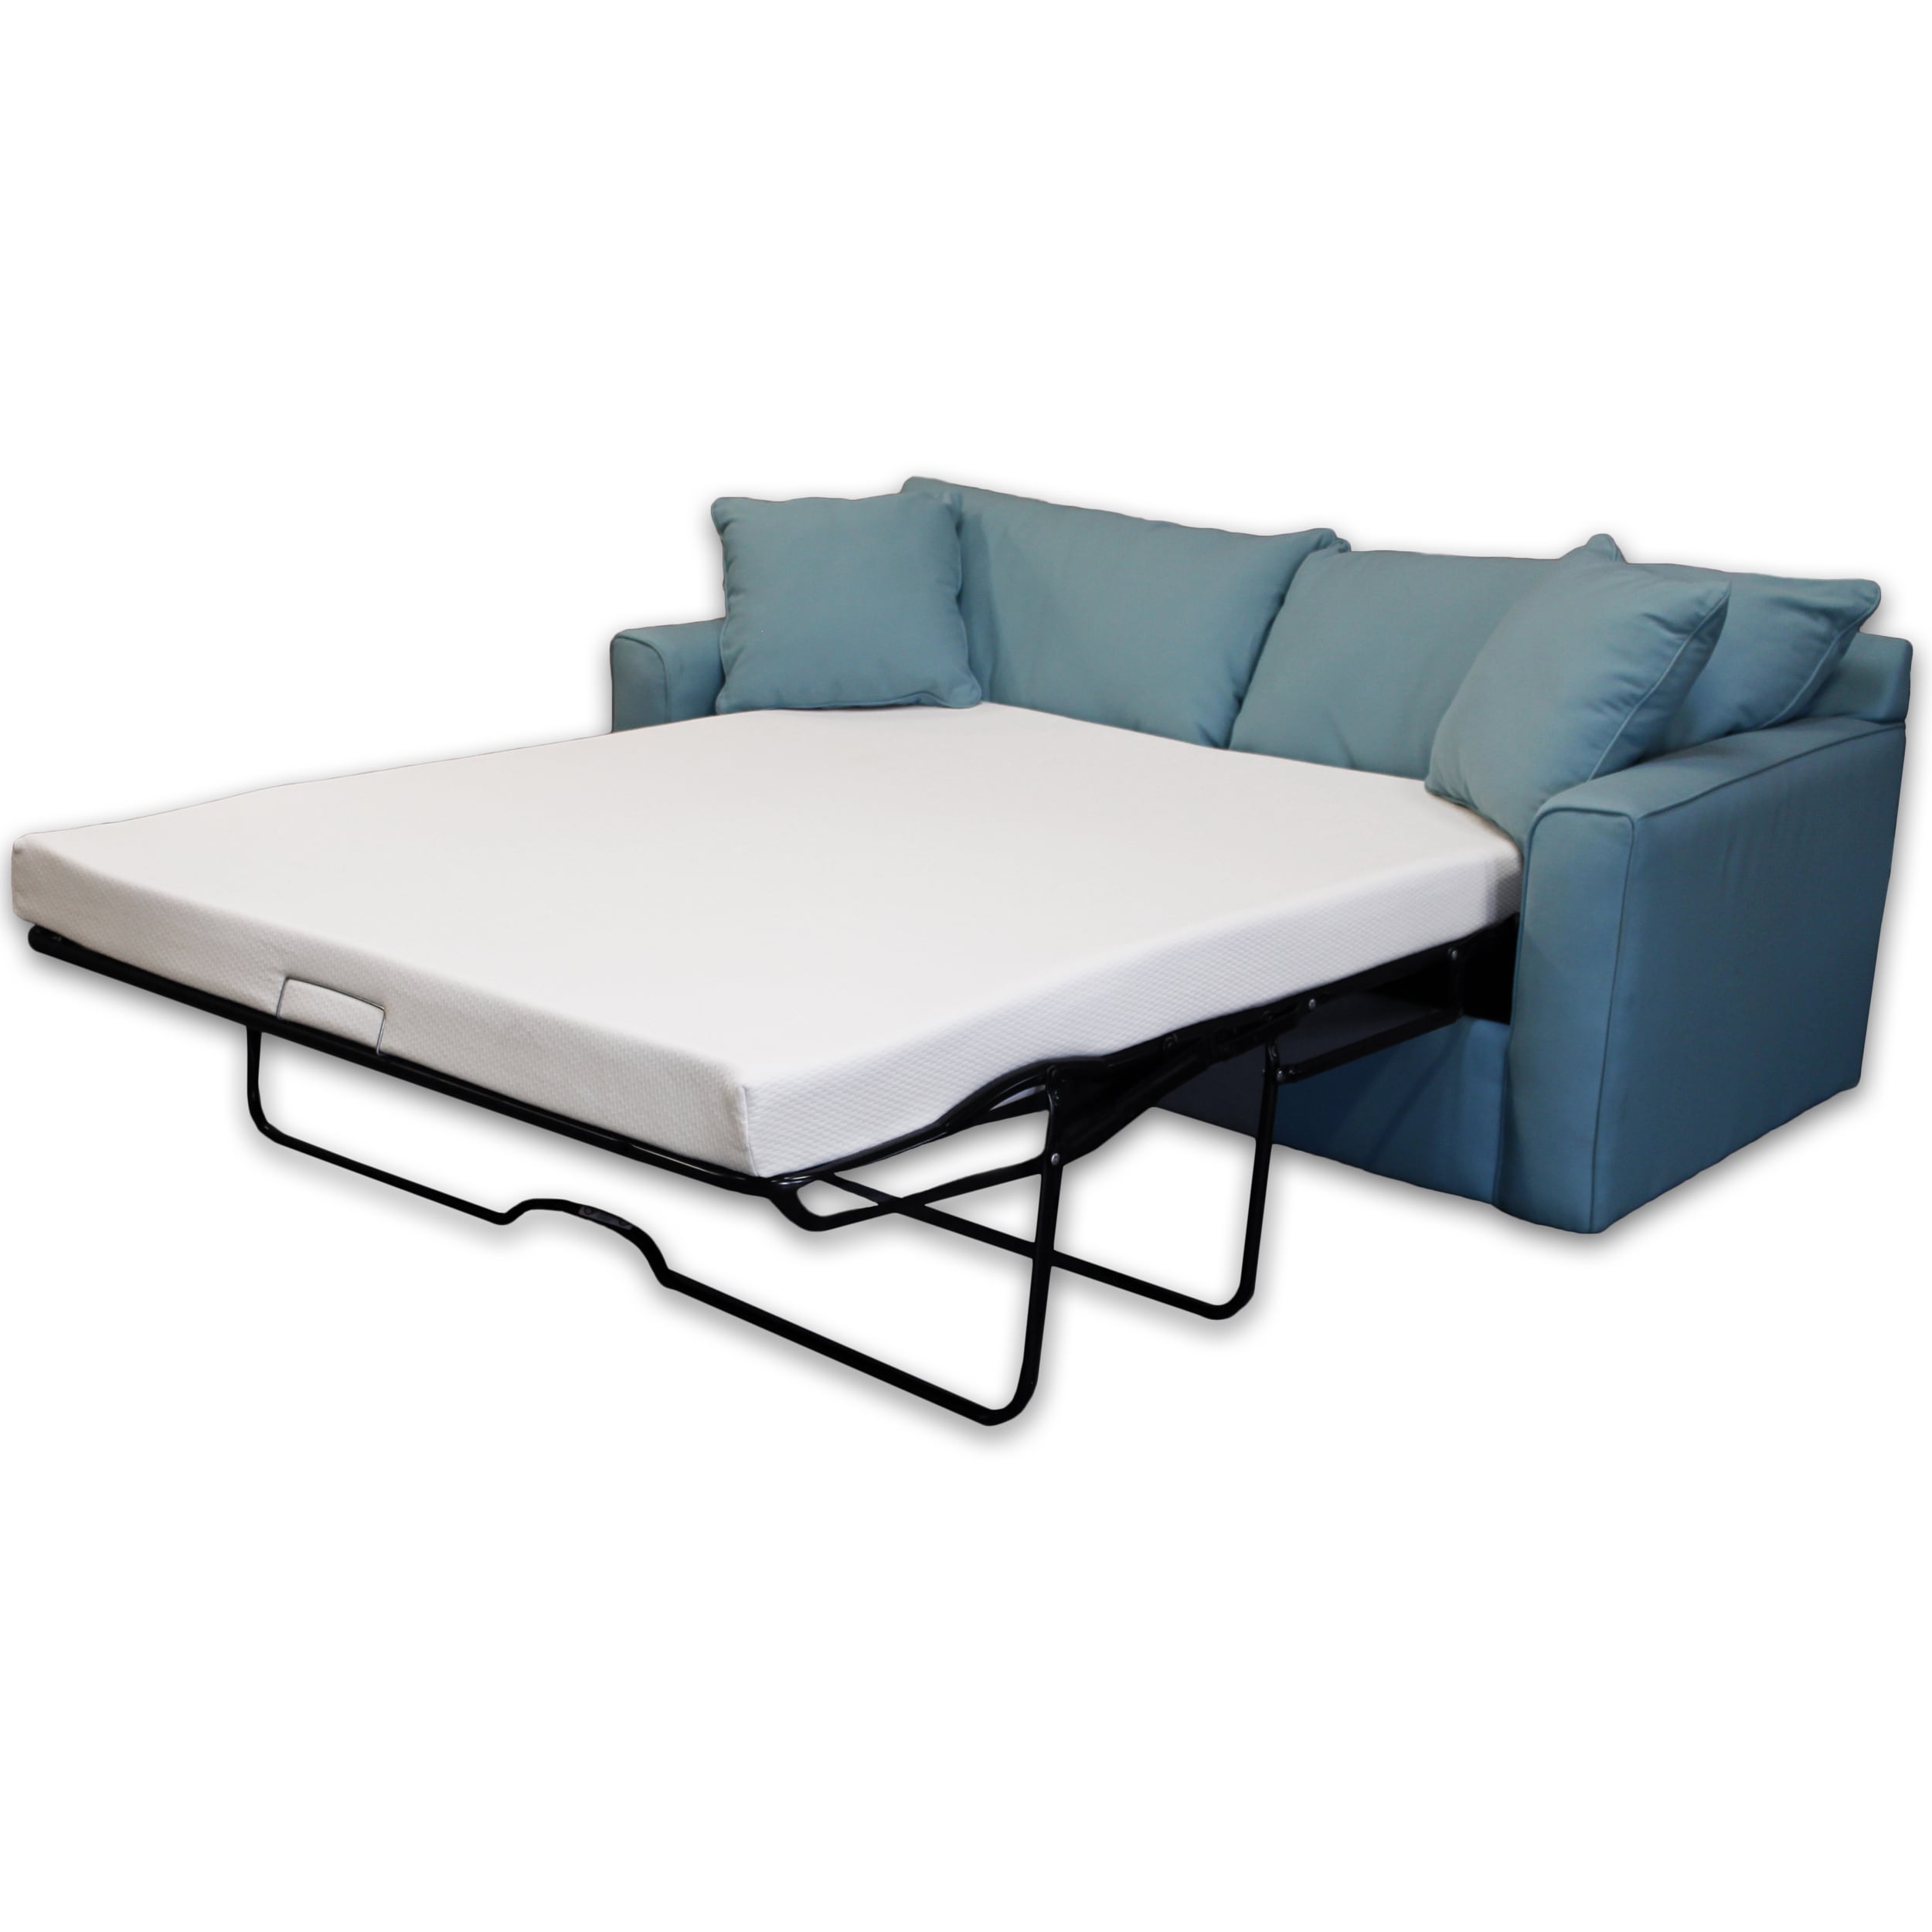 Select Luxury New Life 4.5-inch Full-size Memory Foam Sofa ...